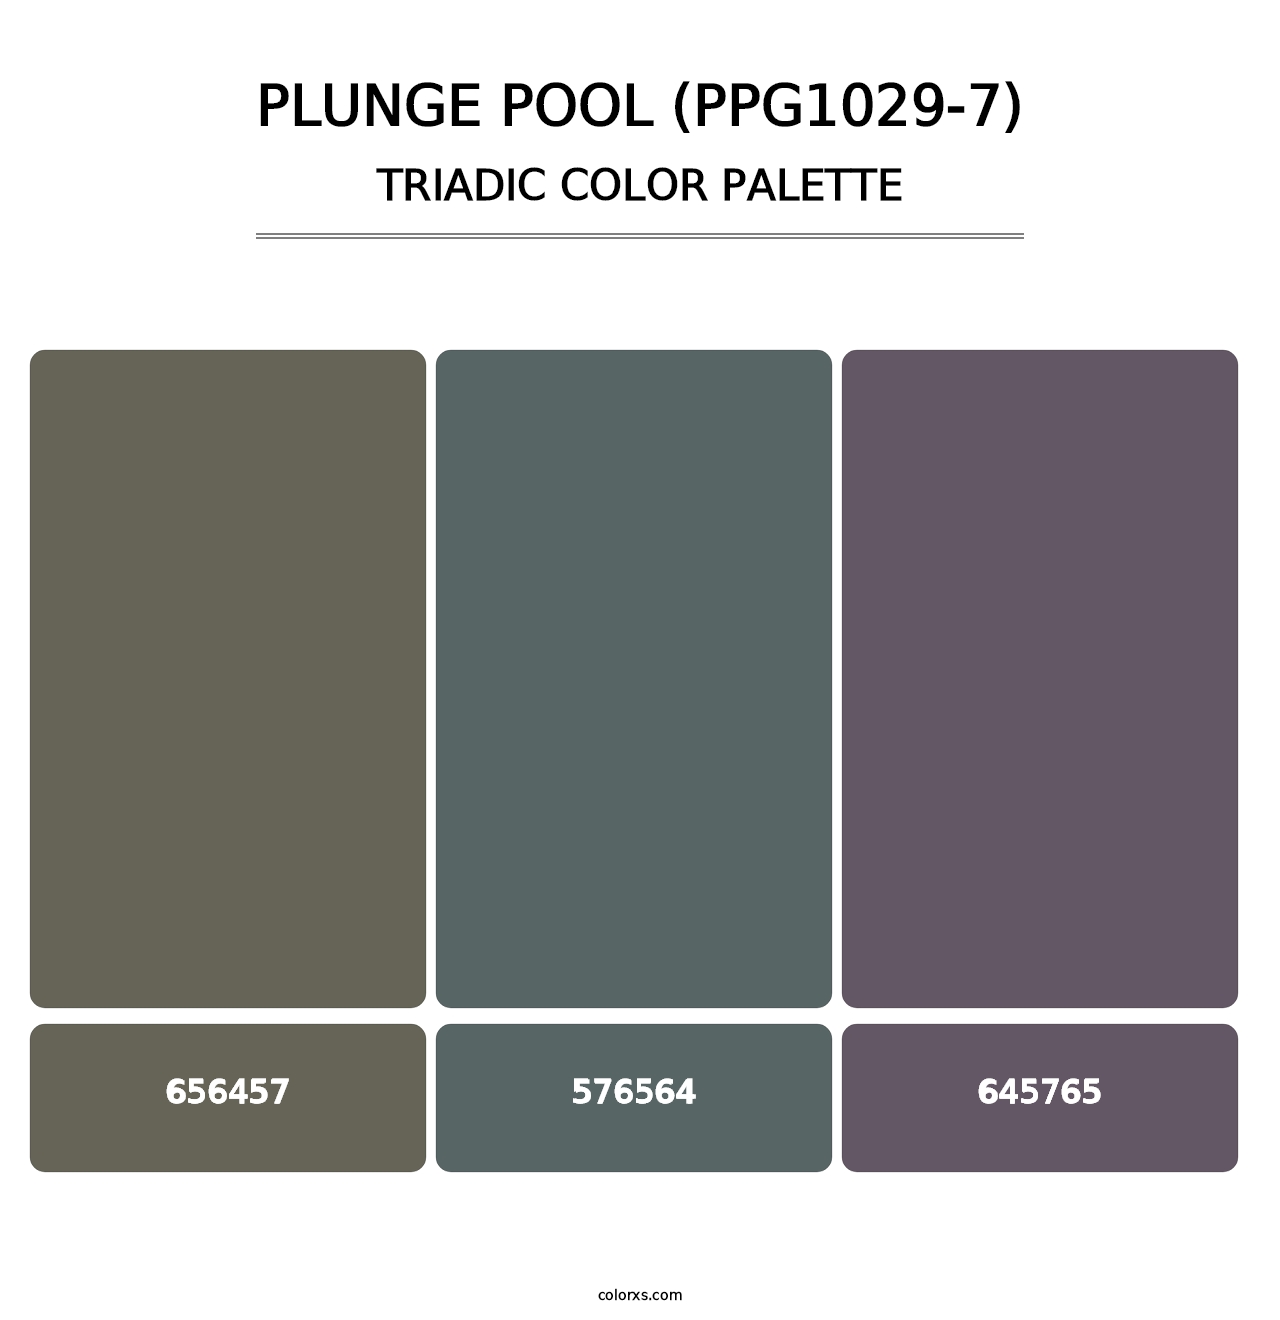 Plunge Pool (PPG1029-7) - Triadic Color Palette